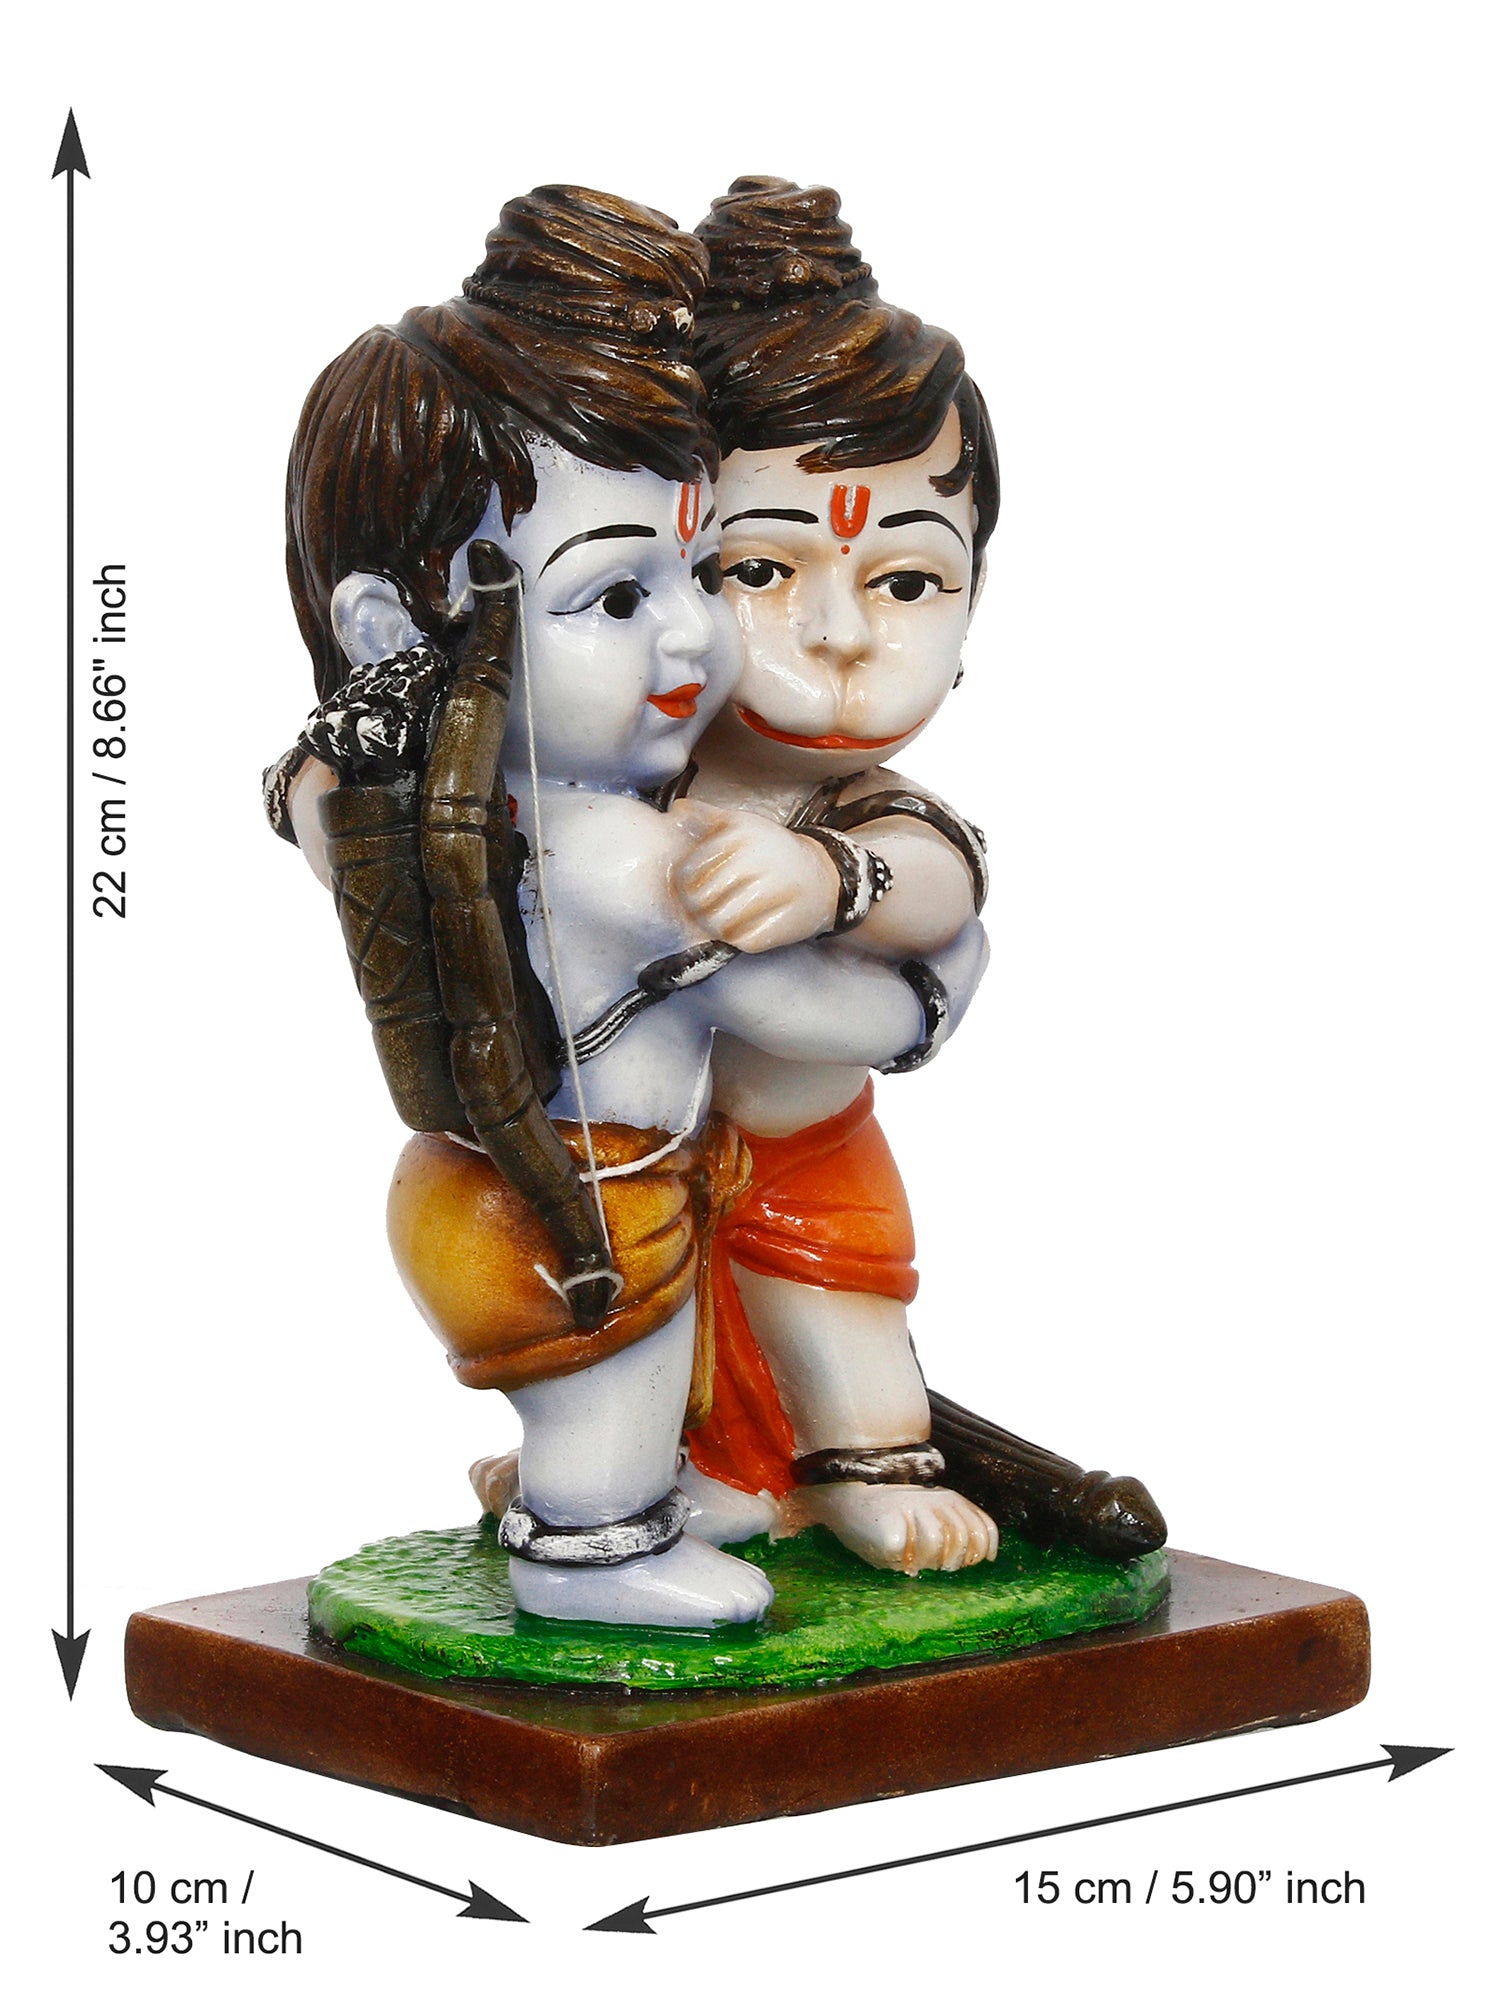 Handcrafted Polyresin Lord Ram Hugging Lord Hanuman Idol (Orange, Green and White) 3